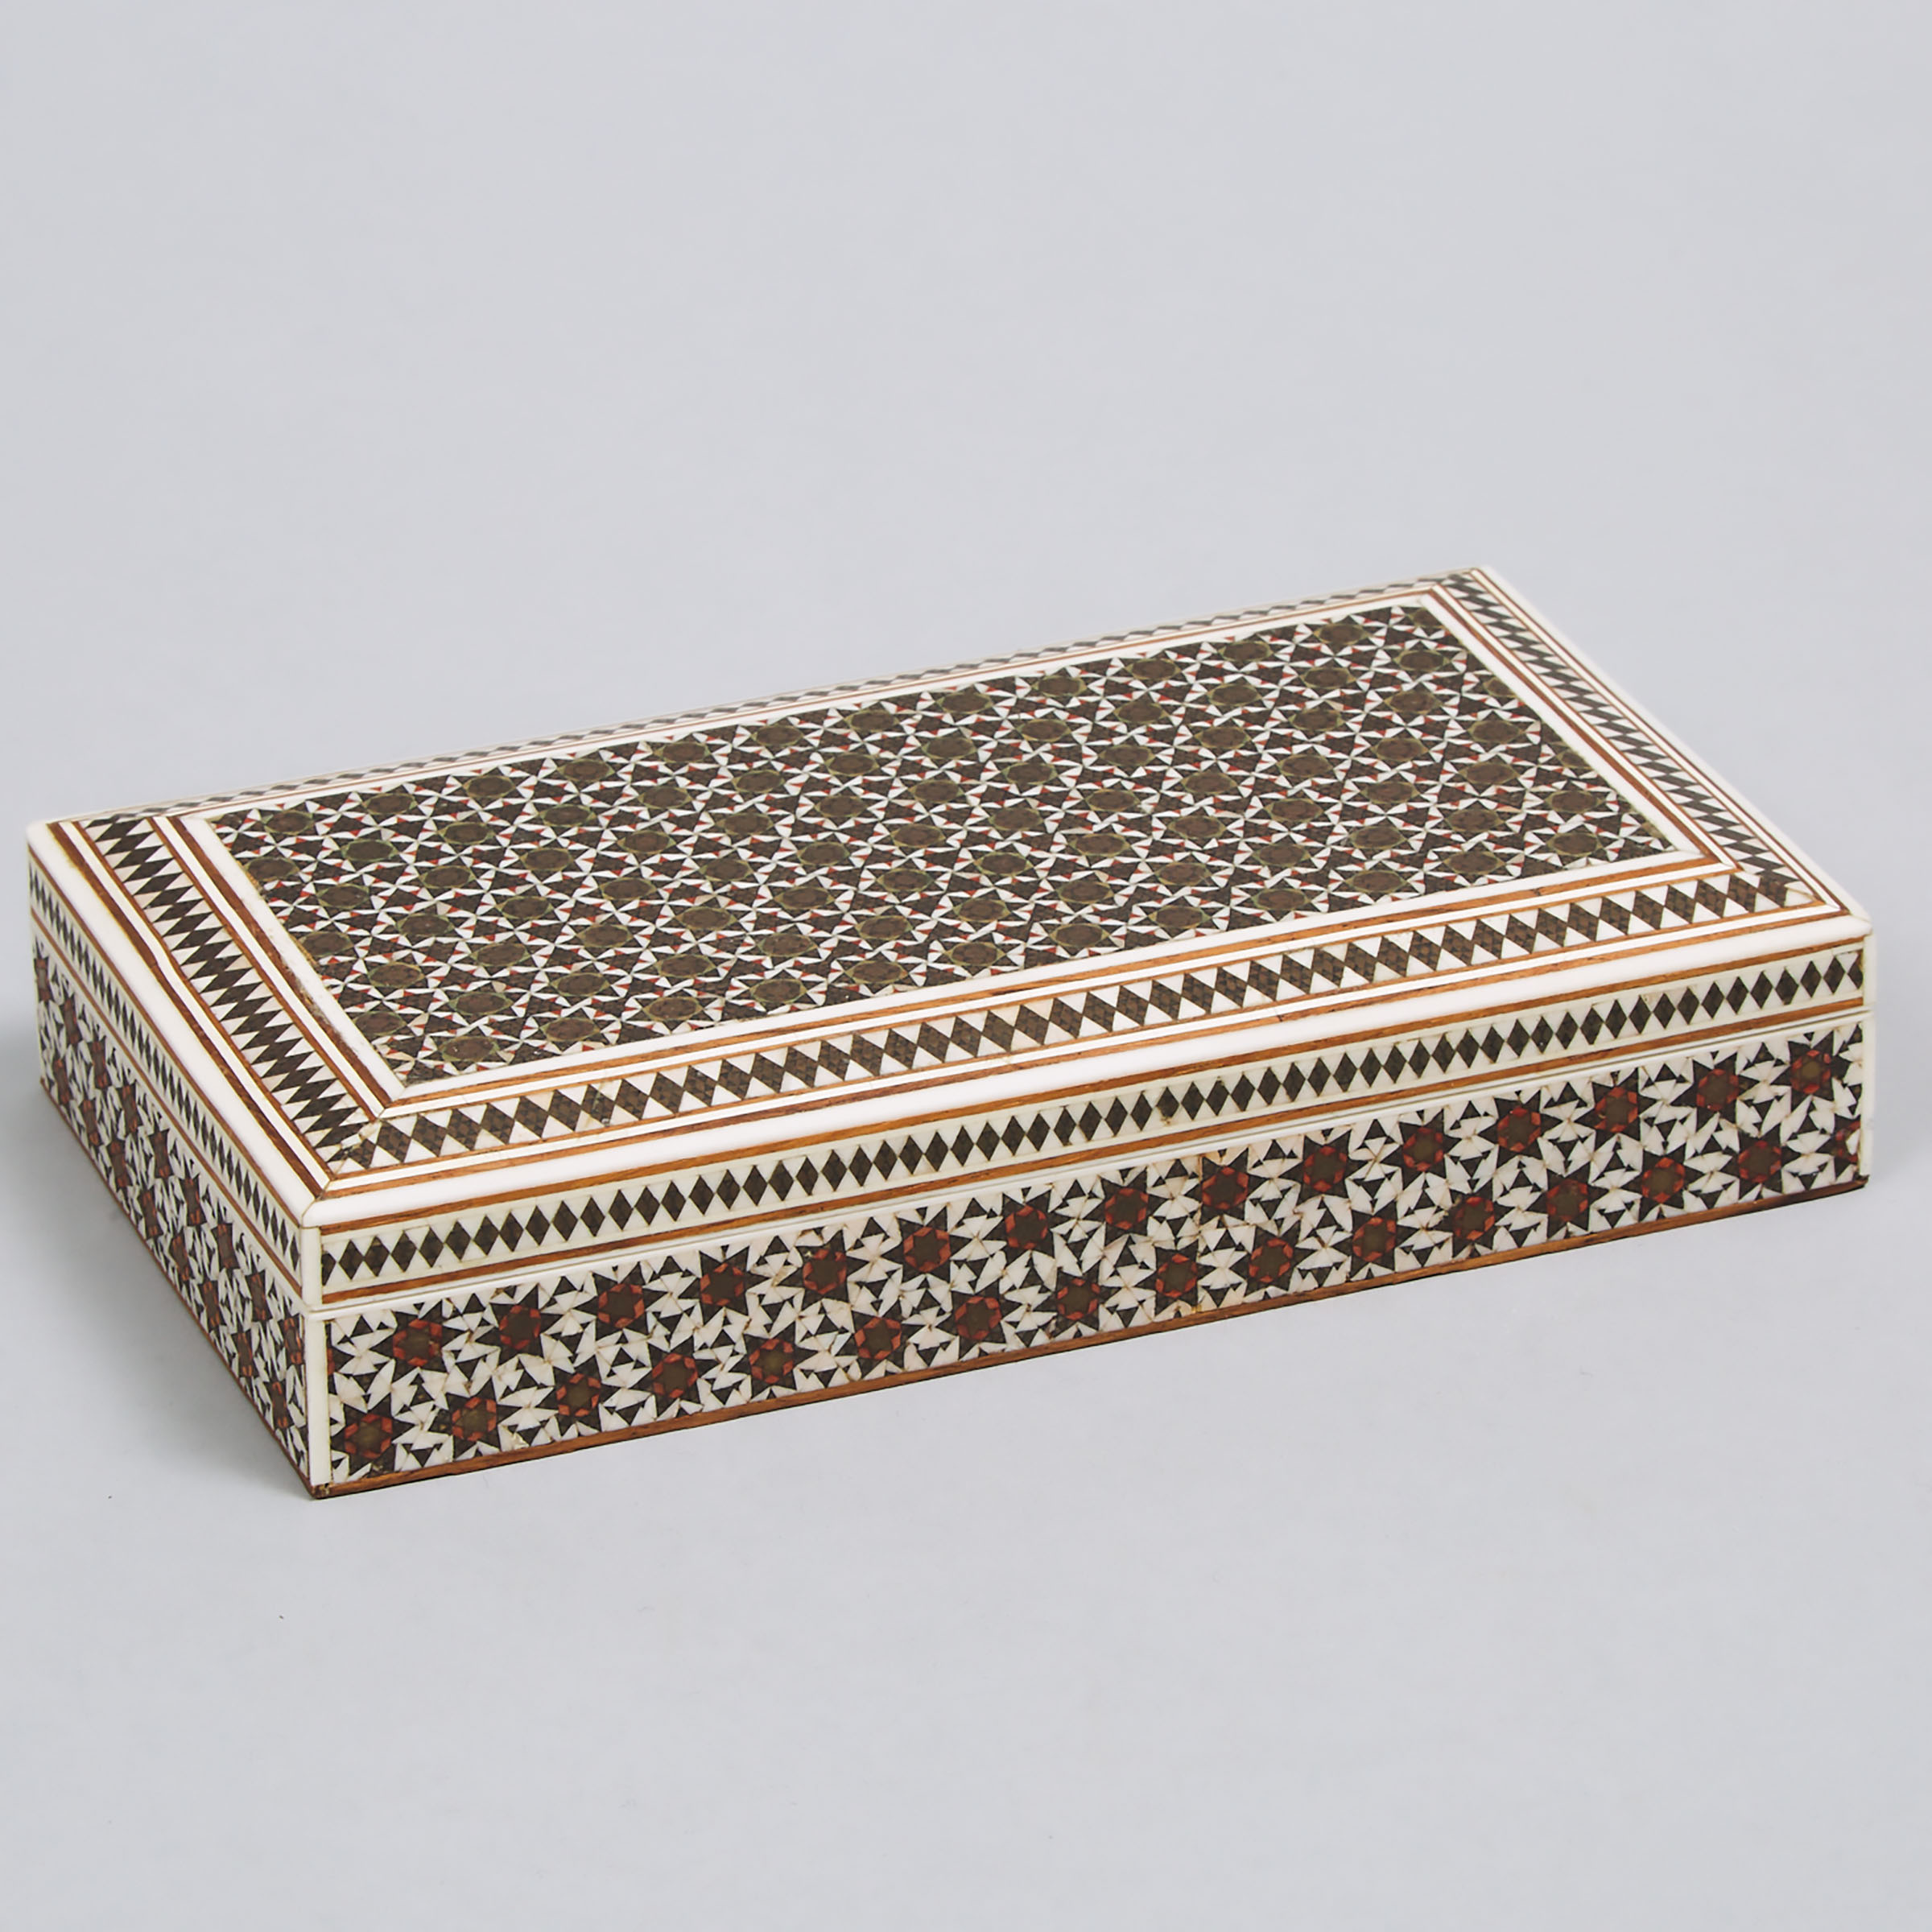 Vizagapatam Bone and Mixed Material Inlaid Sandalwood Box, mid 20th century